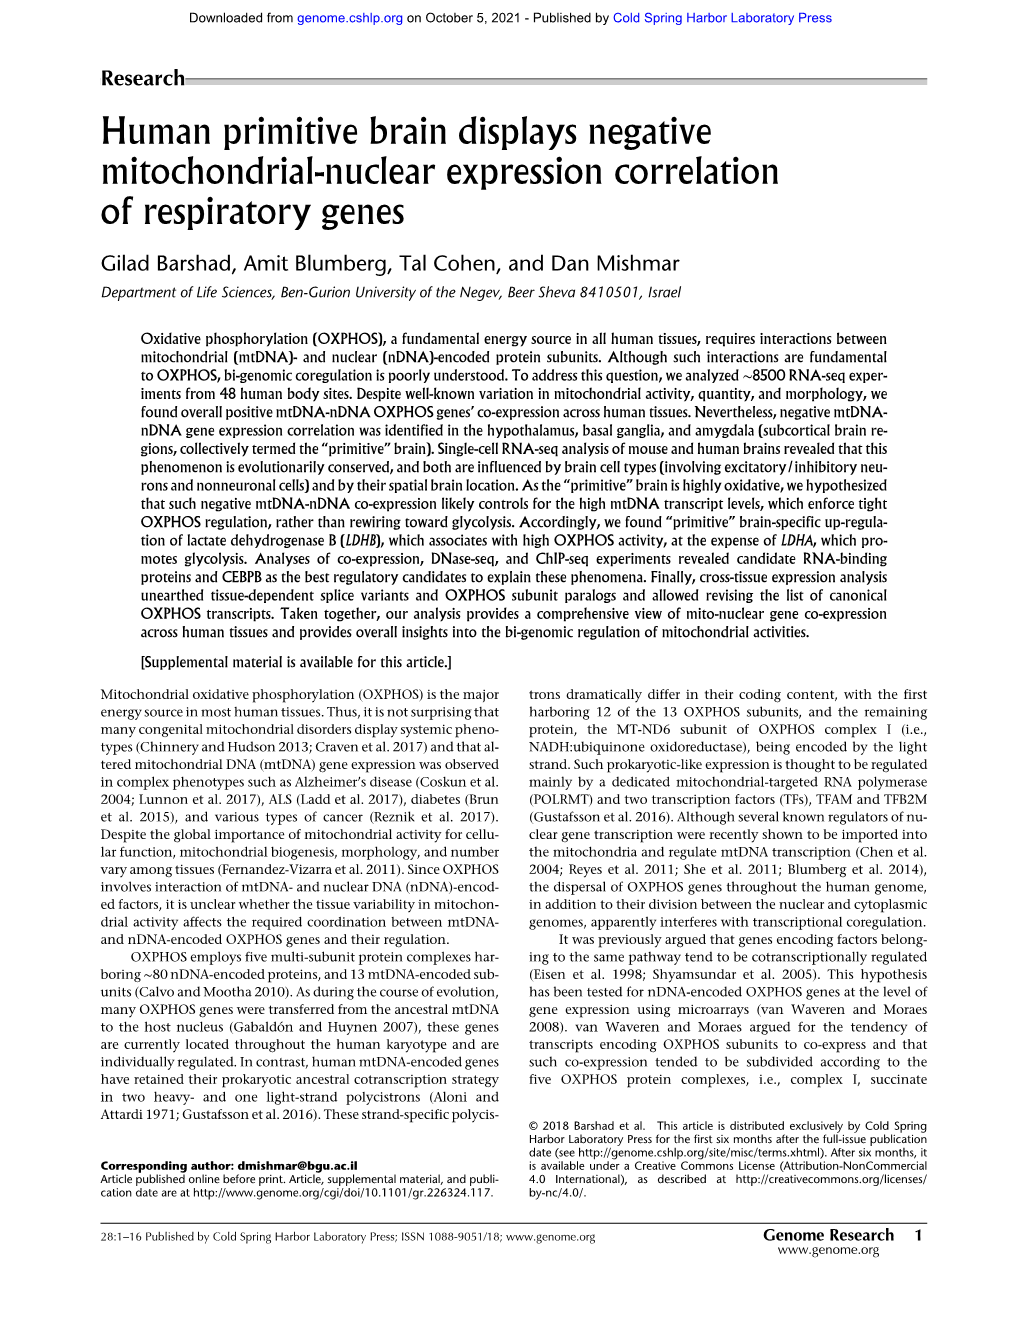 Human Primitive Brain Displays Negative Mitochondrial-Nuclear Expression Correlation of Respiratory Genes